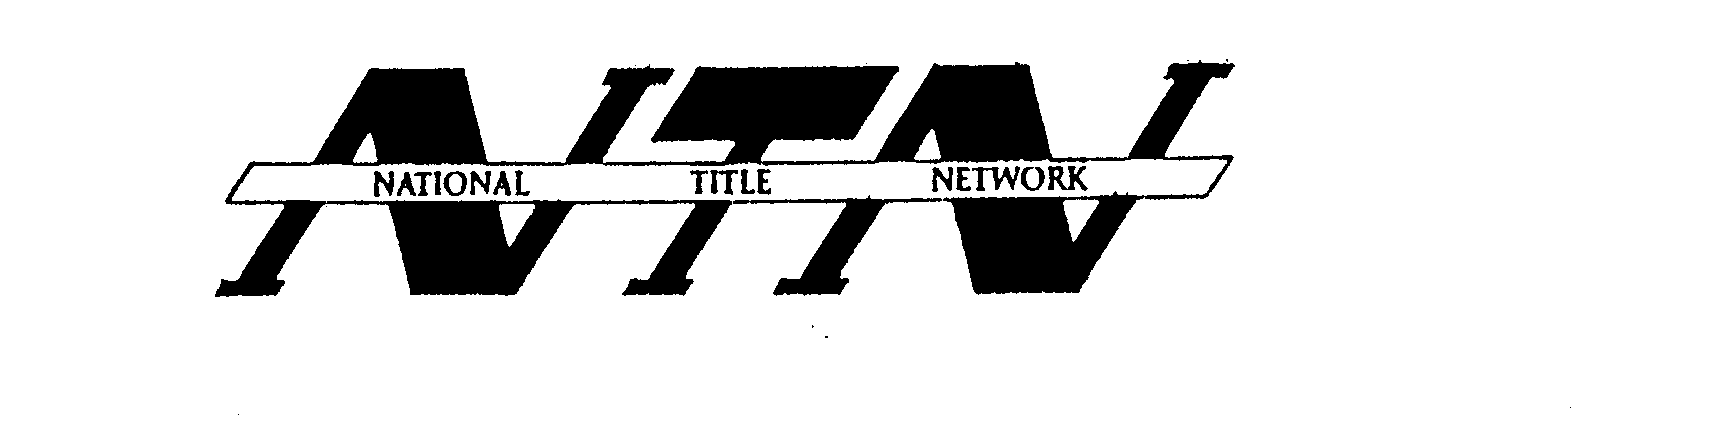  NTN NATIONAL TITLE NETWORK